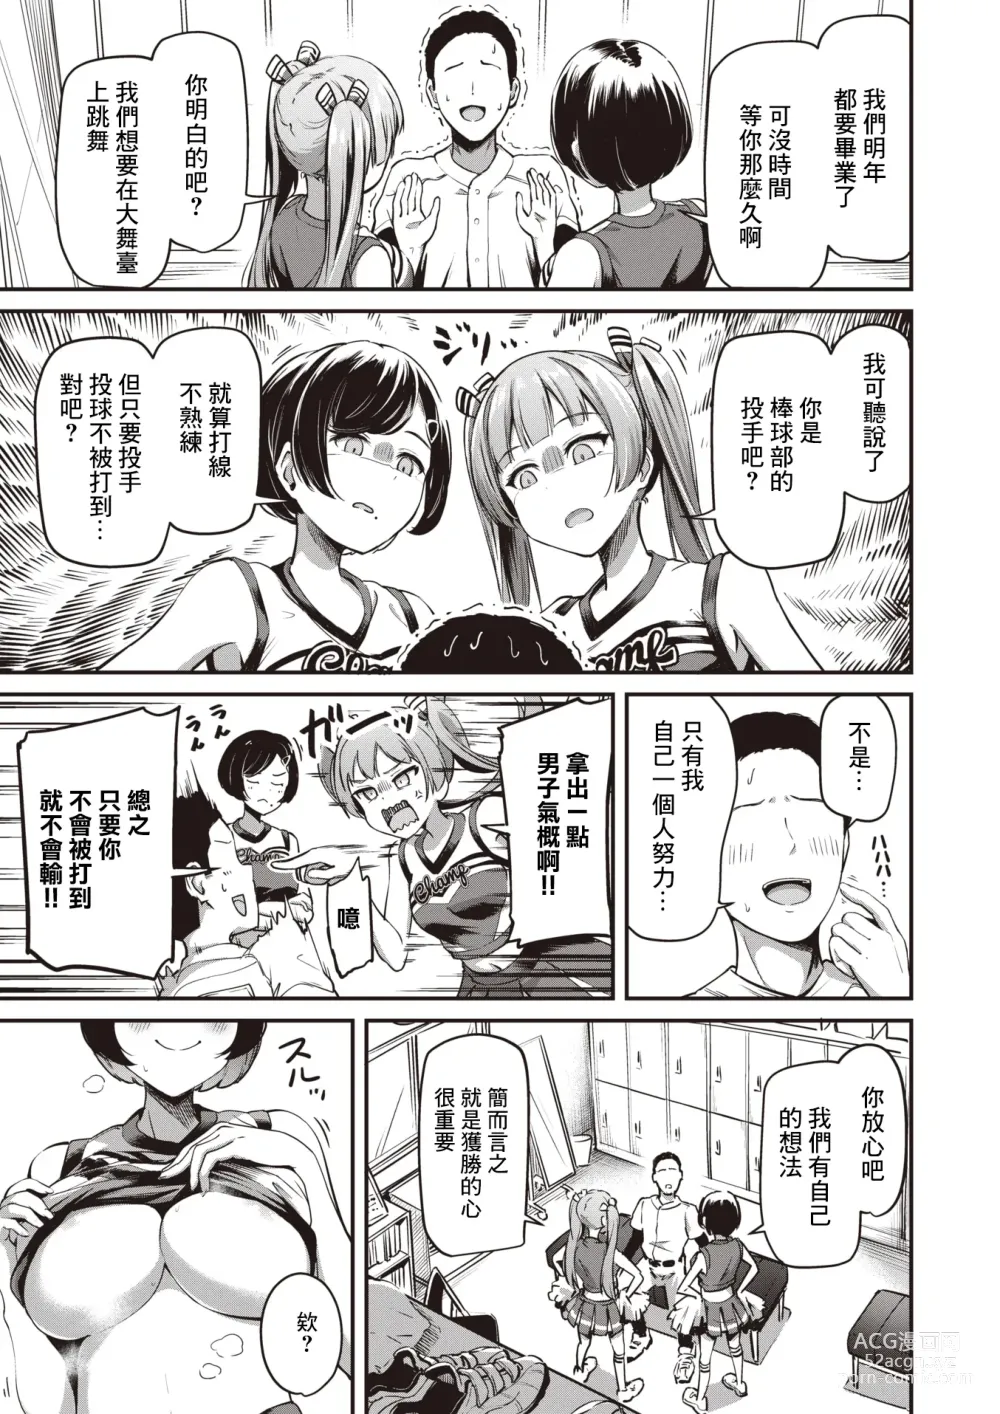 Page 3 of manga Furuitate Captain!